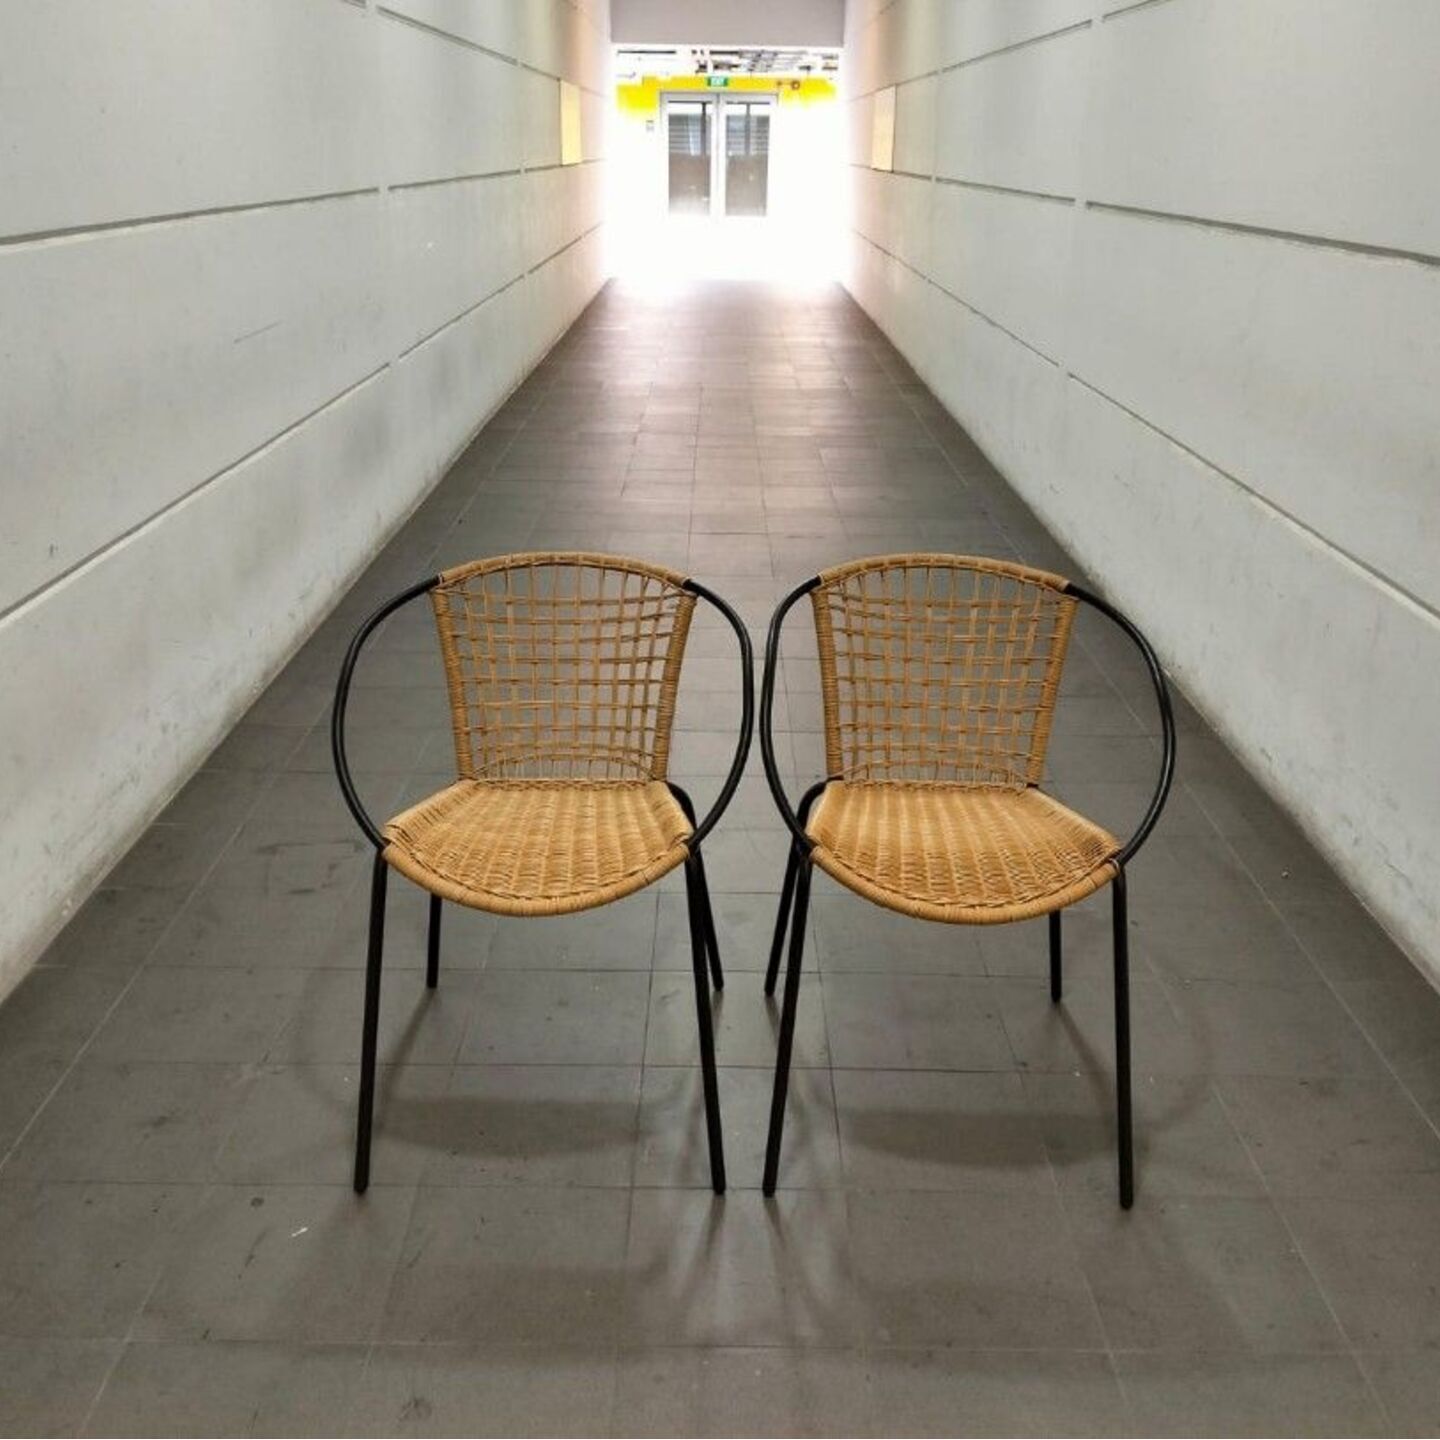 SHAMBHALA Outdoor Dining Chairs (set of 2)